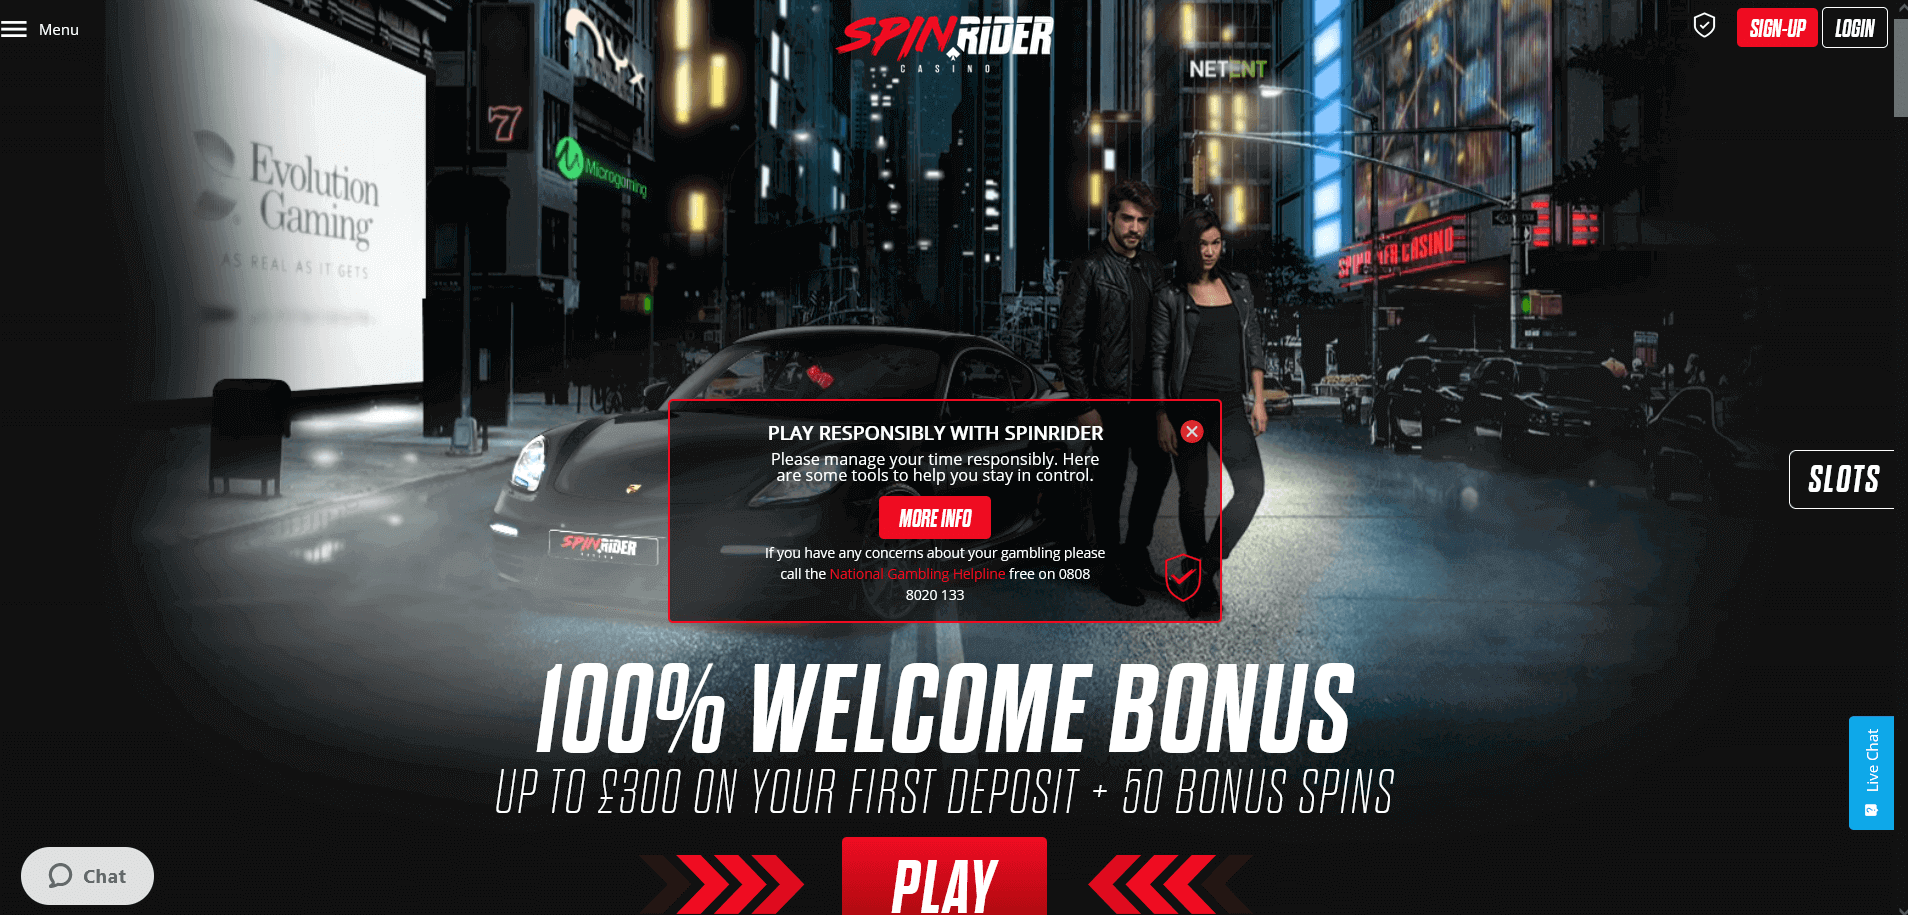 Spin Rider casino homepage